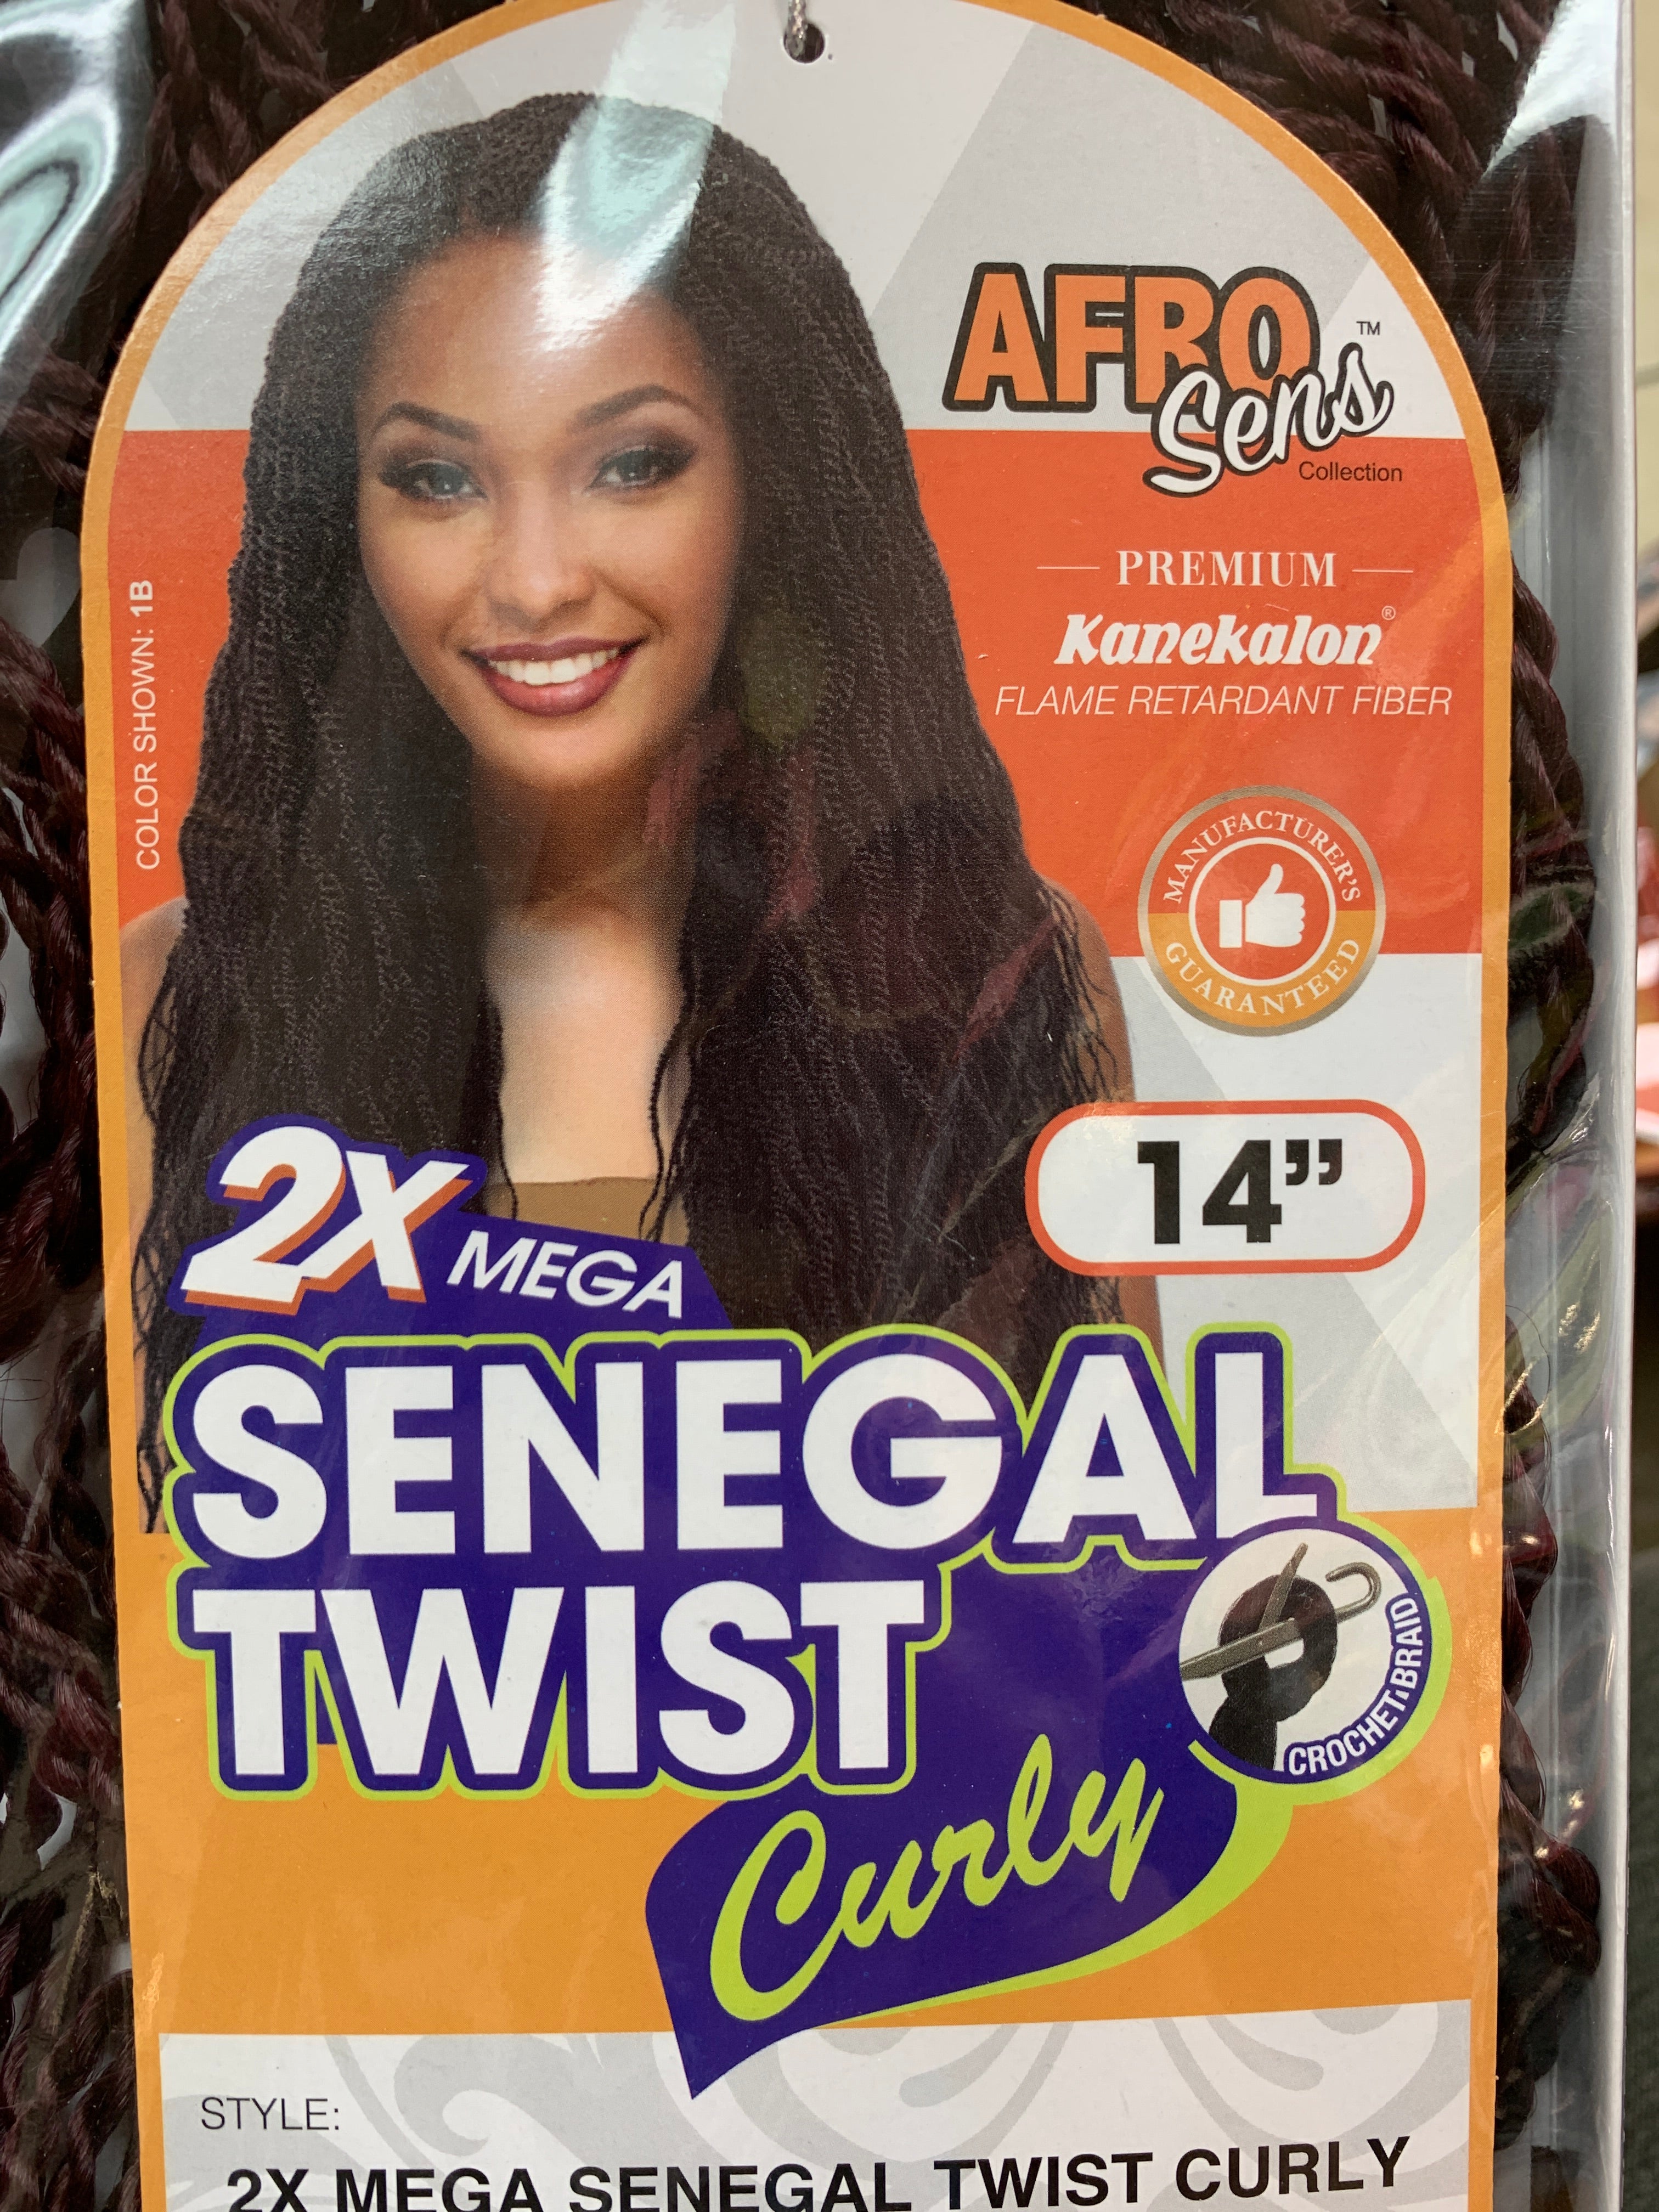 Afro sens 2x senegal twist curly 14” 20”